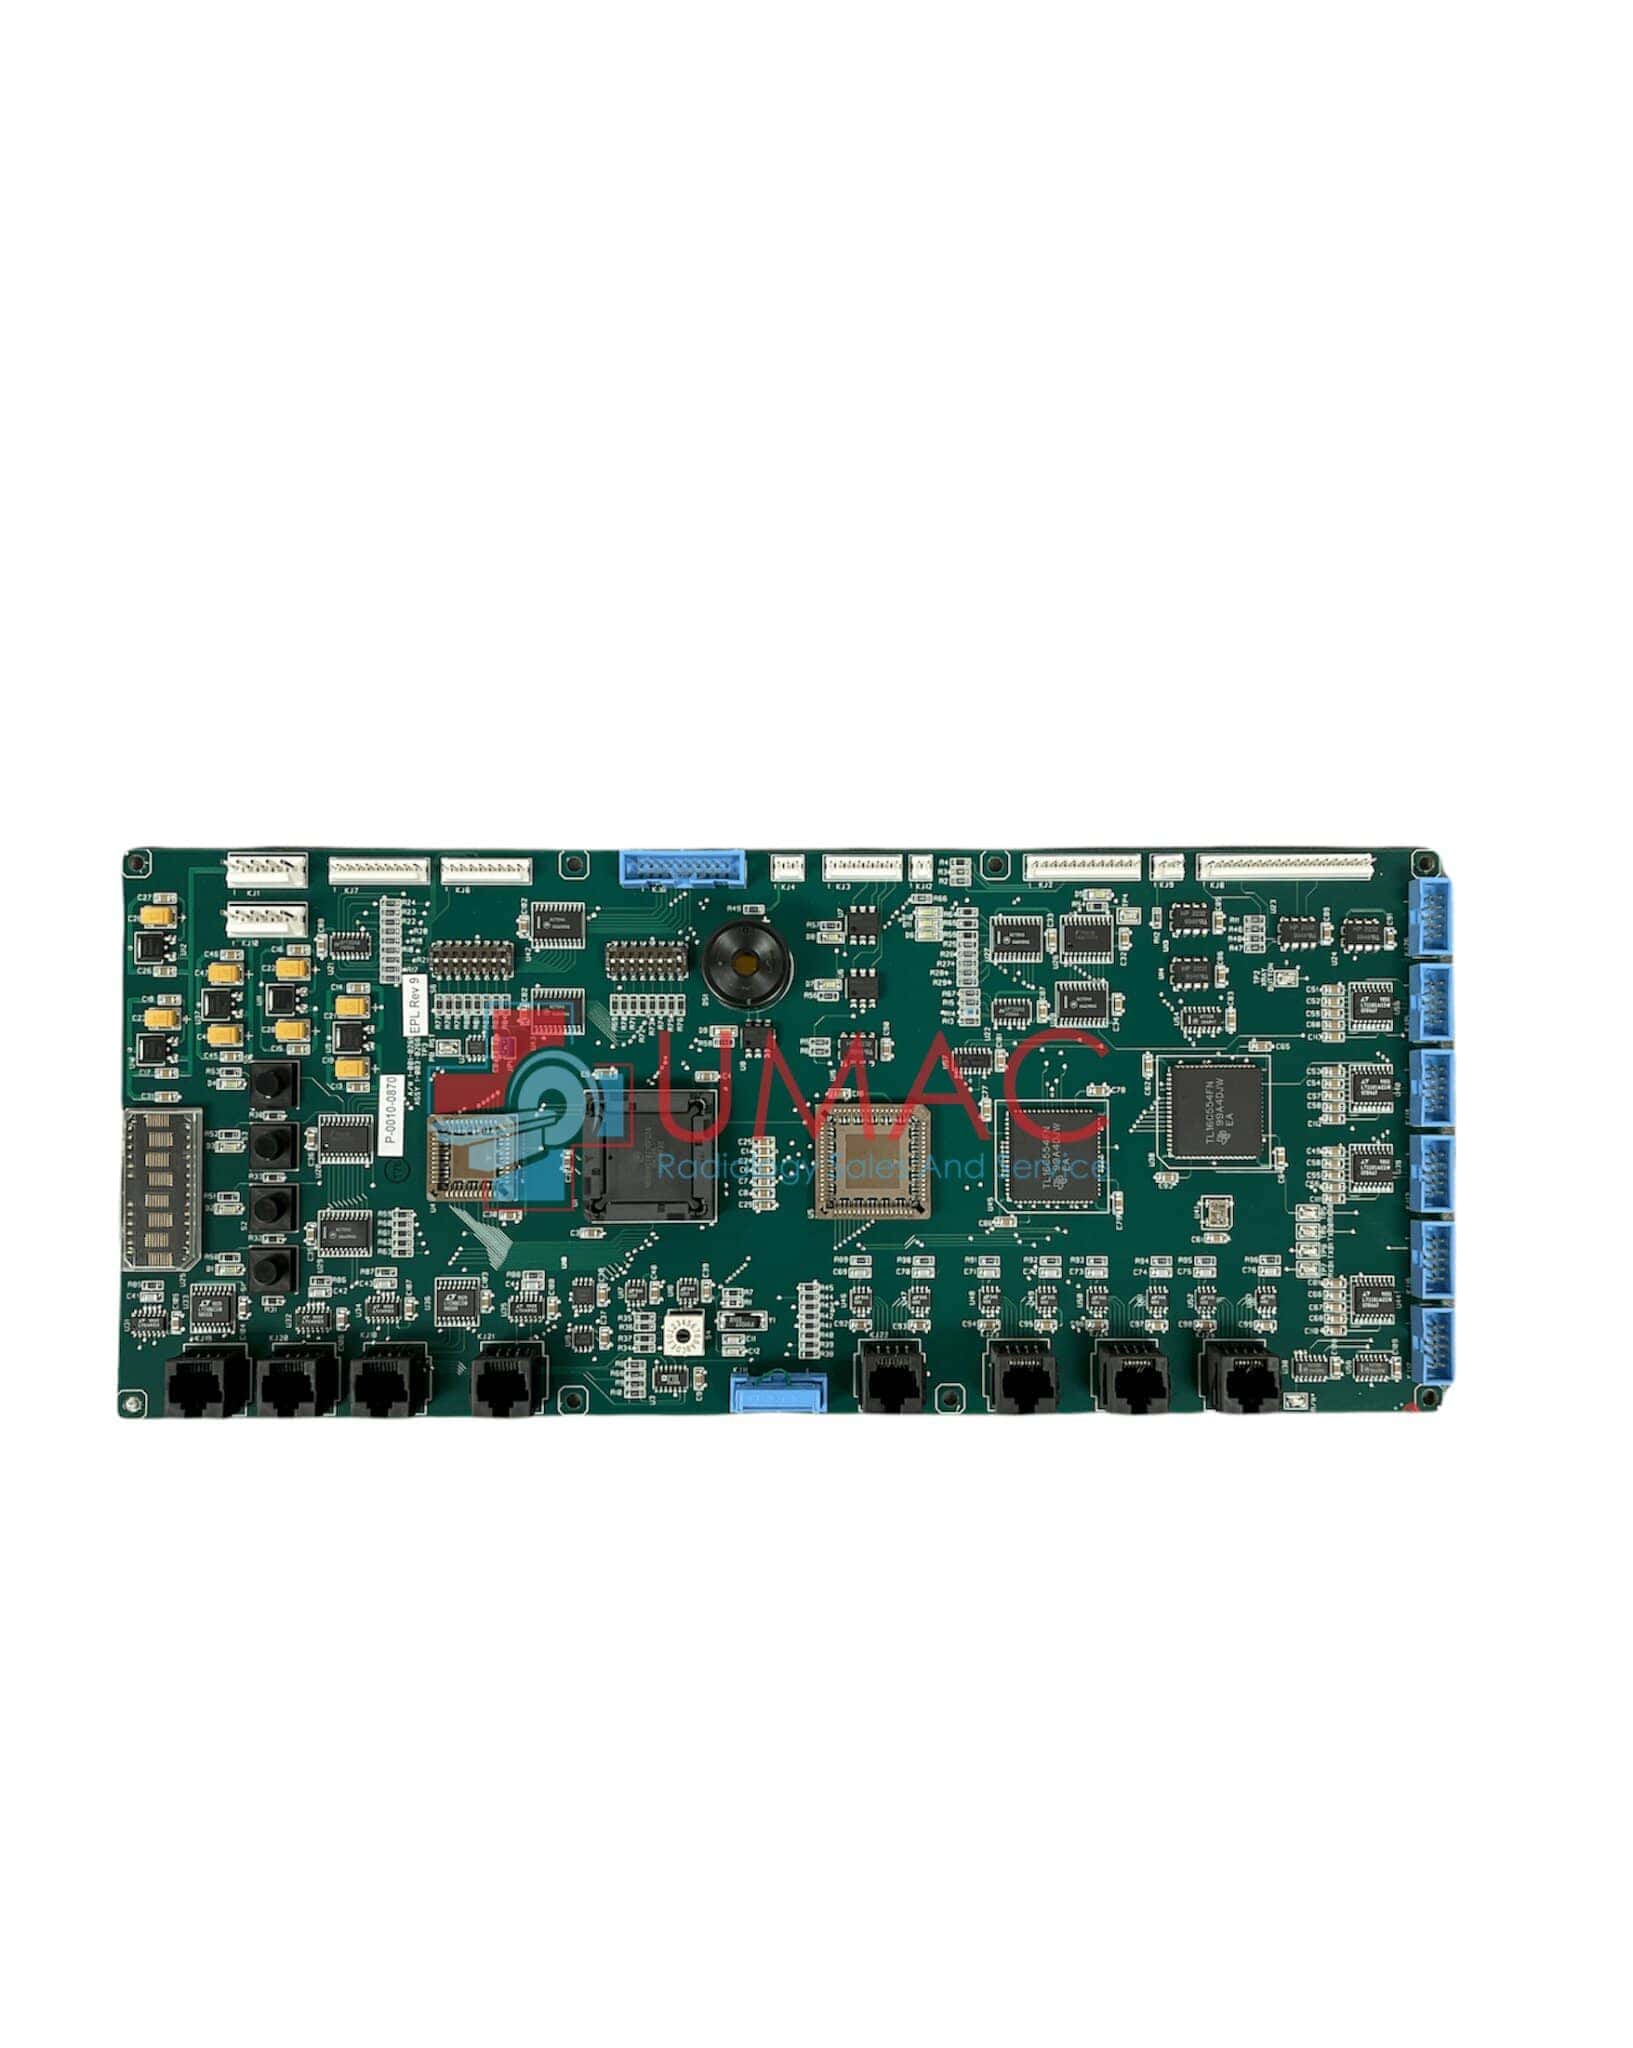 Hologic Lorad M-IV 1-003-0266 Host Micro Processor Board